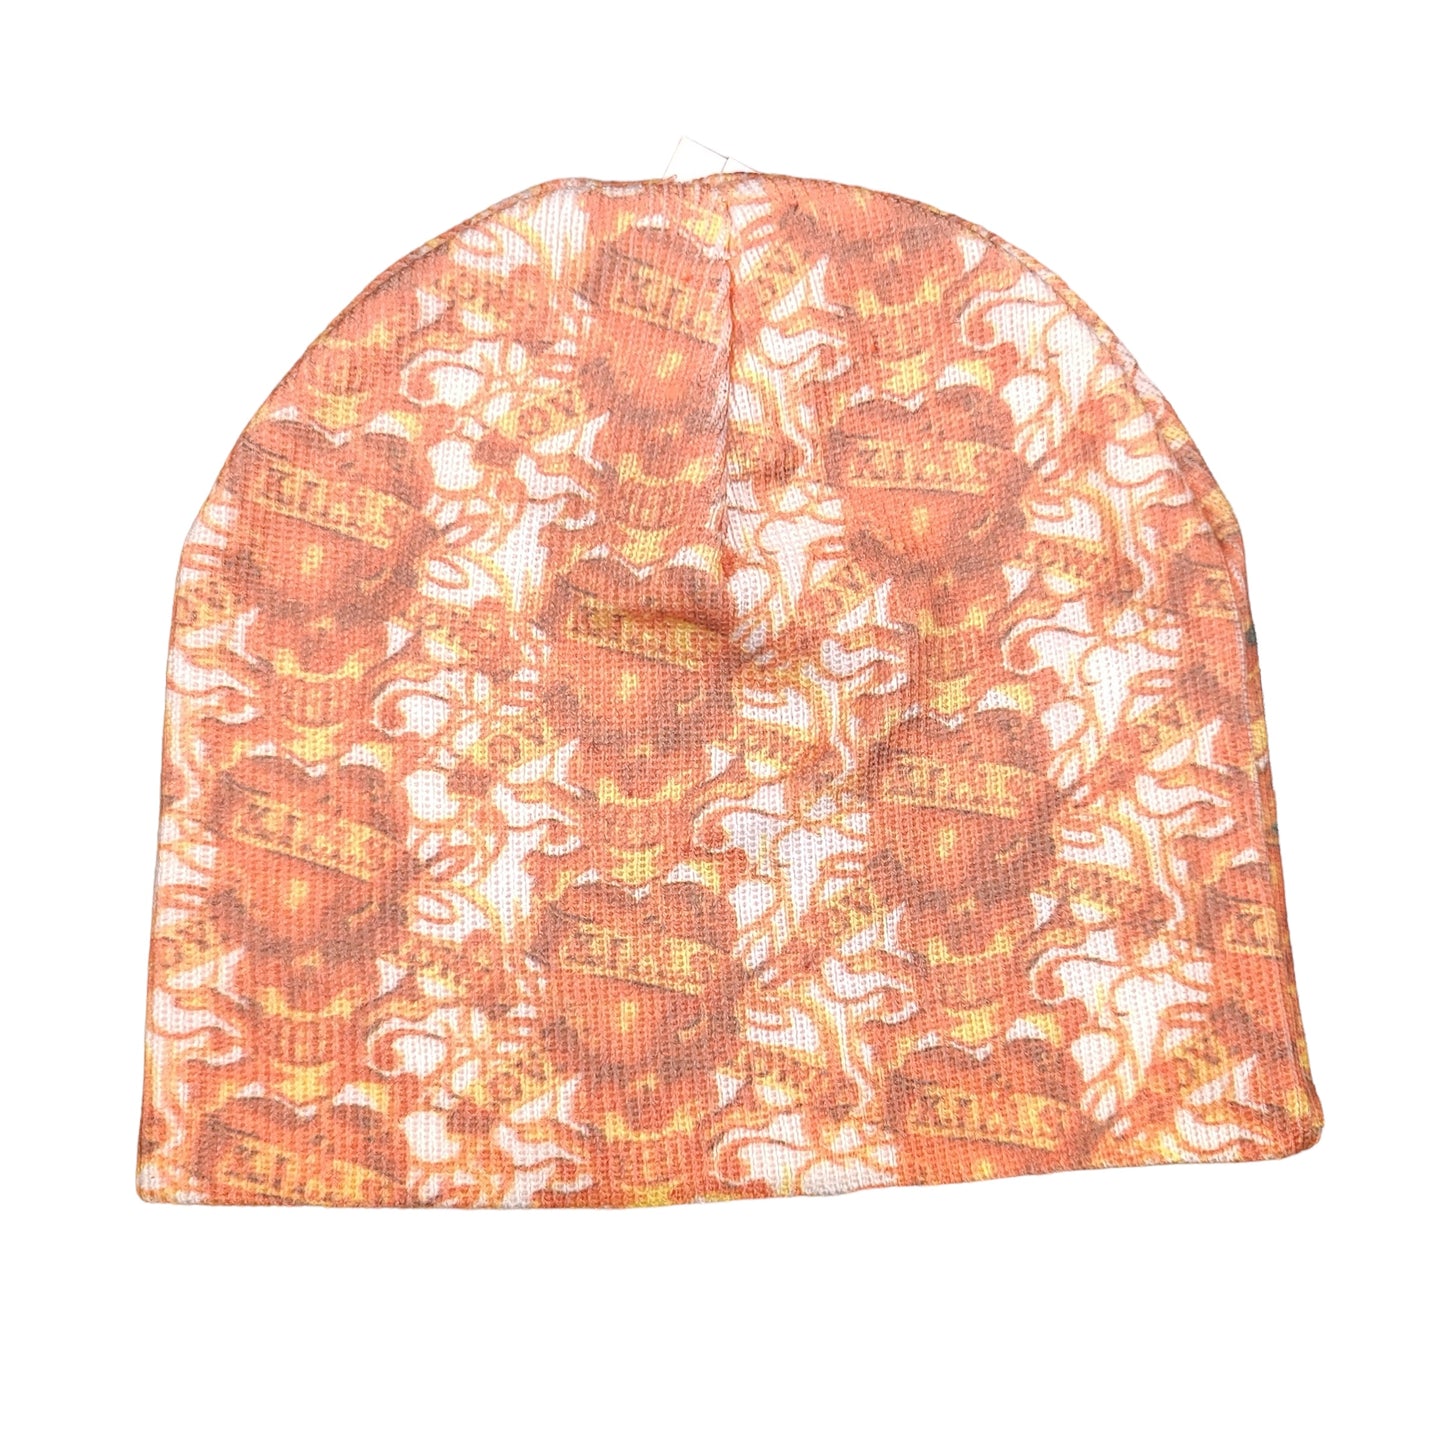 Tattoo Wear Orange Koi Beanie Hat (New with Tags)